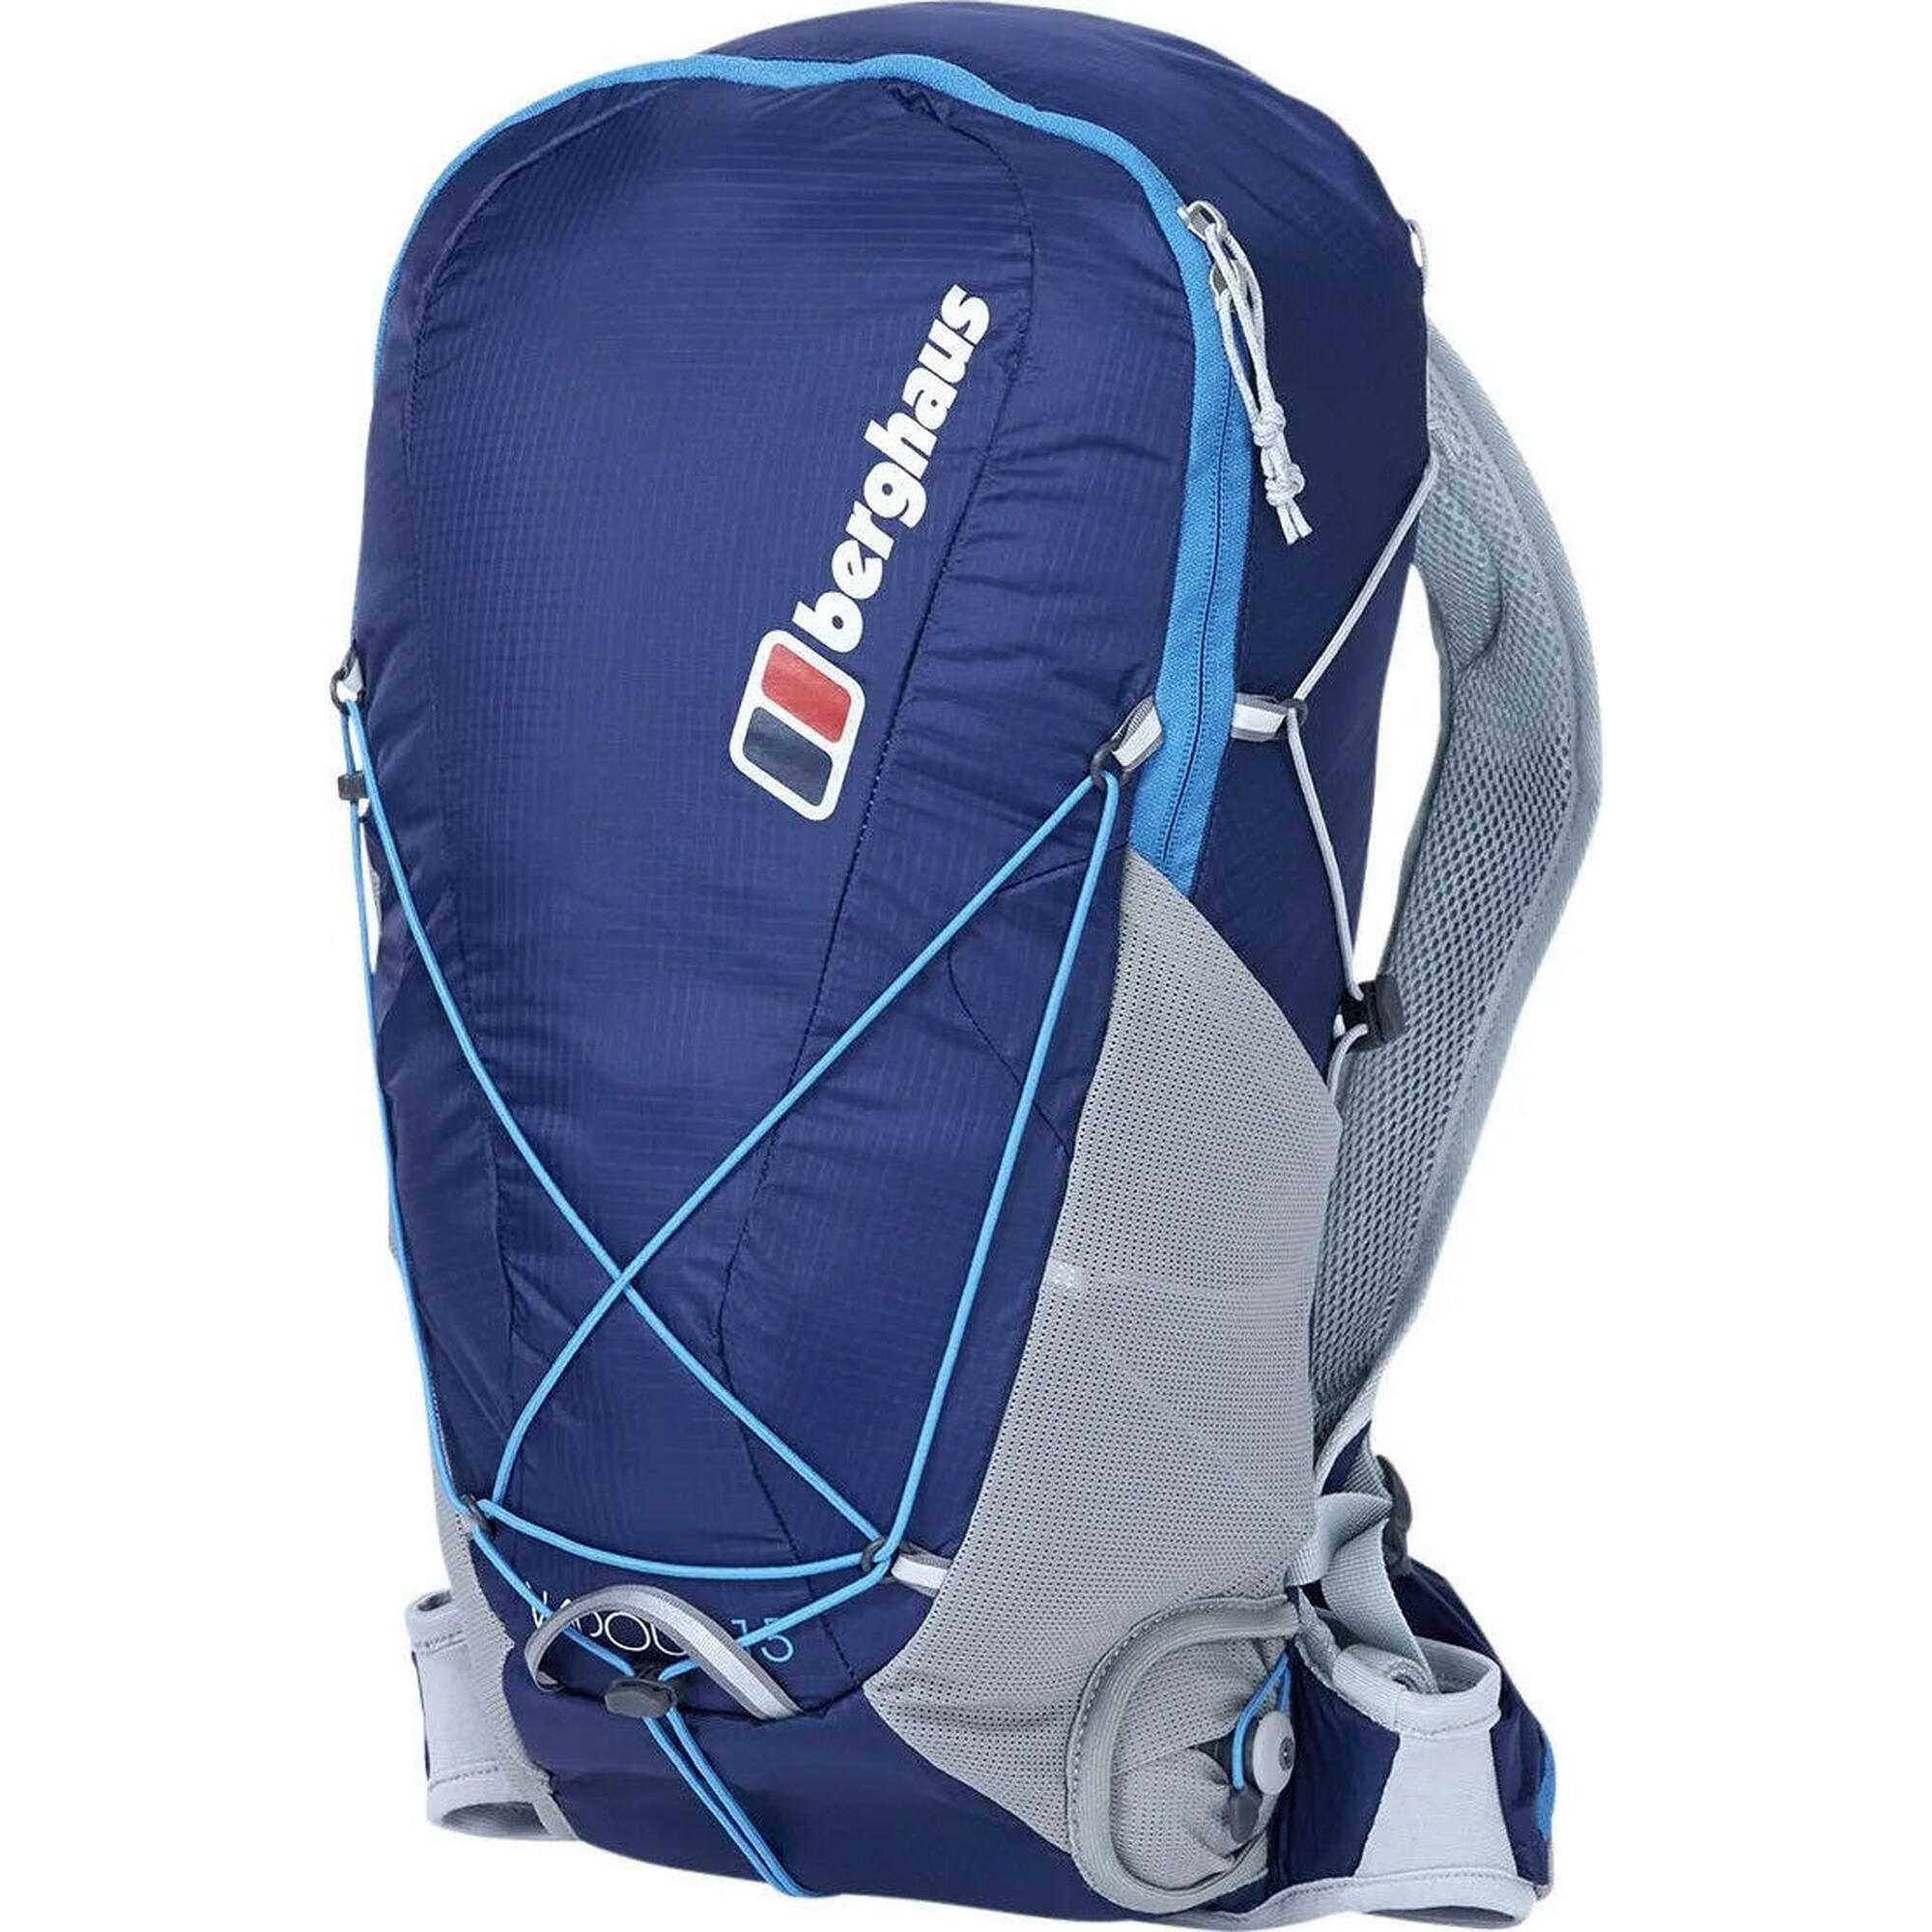 Vapour 15 登山健行輕量背包 15L - 藍色